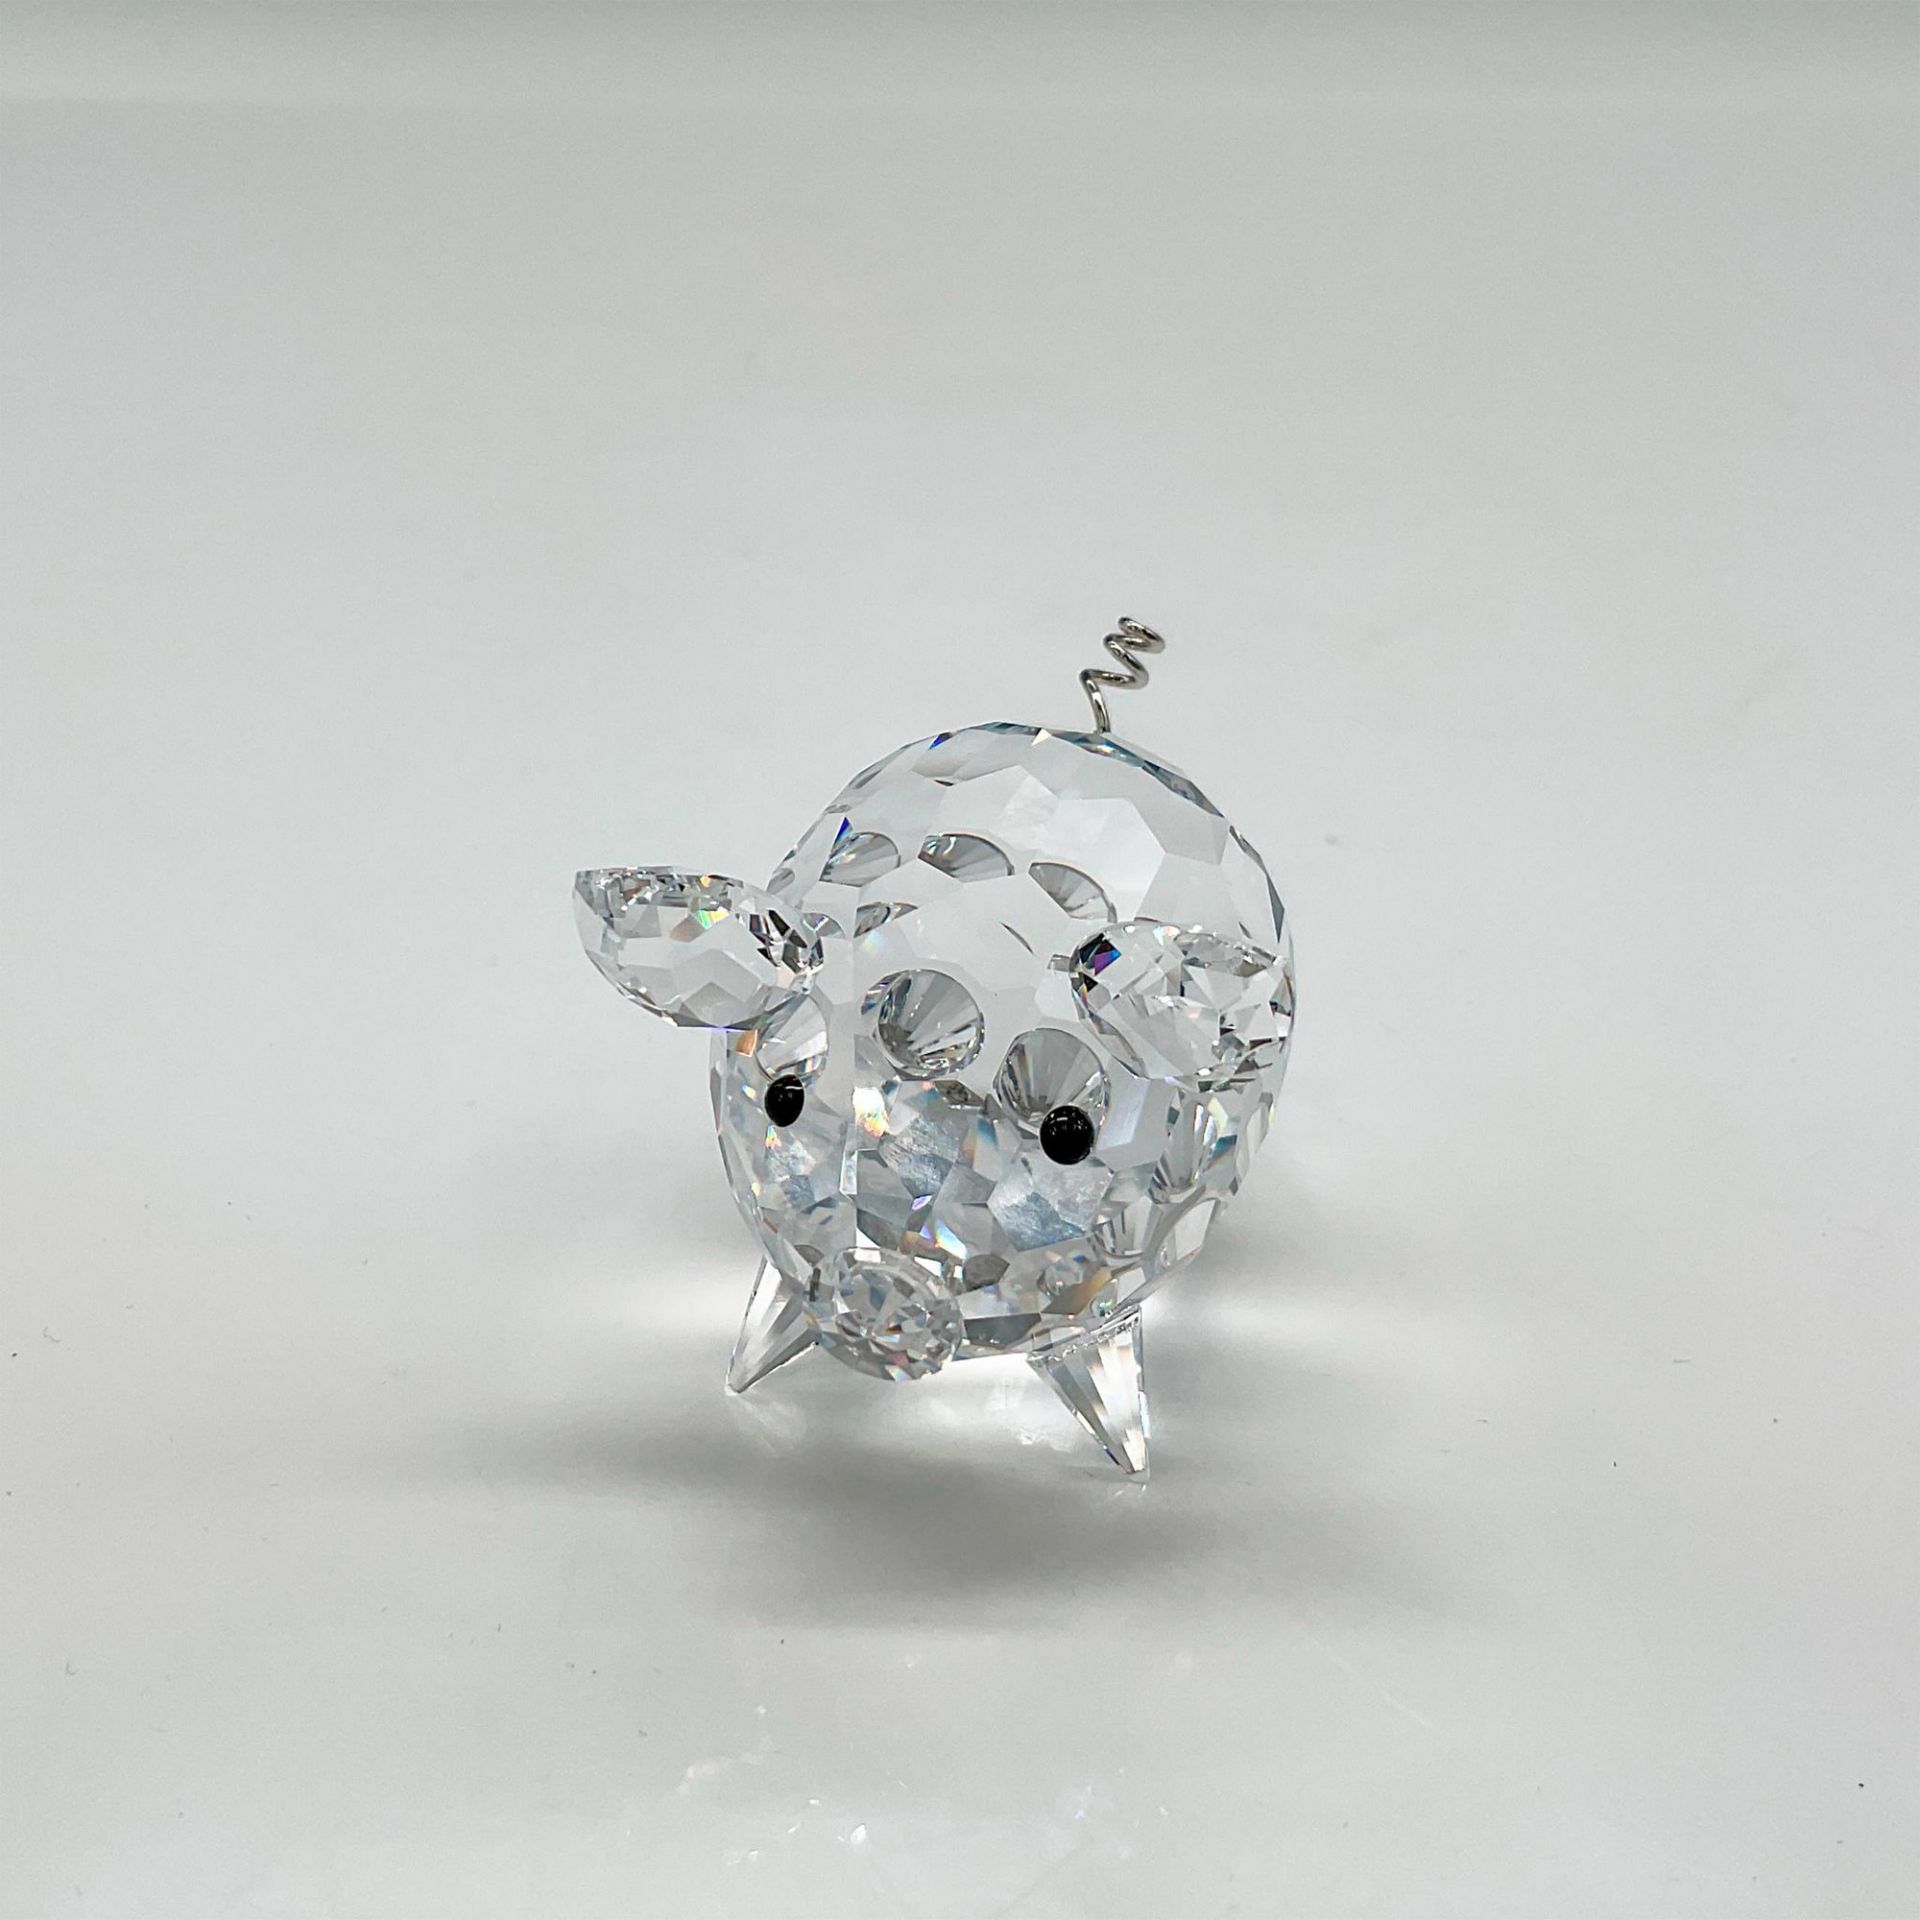 Swarovski Silver Crystal Figurine, Medium Pig